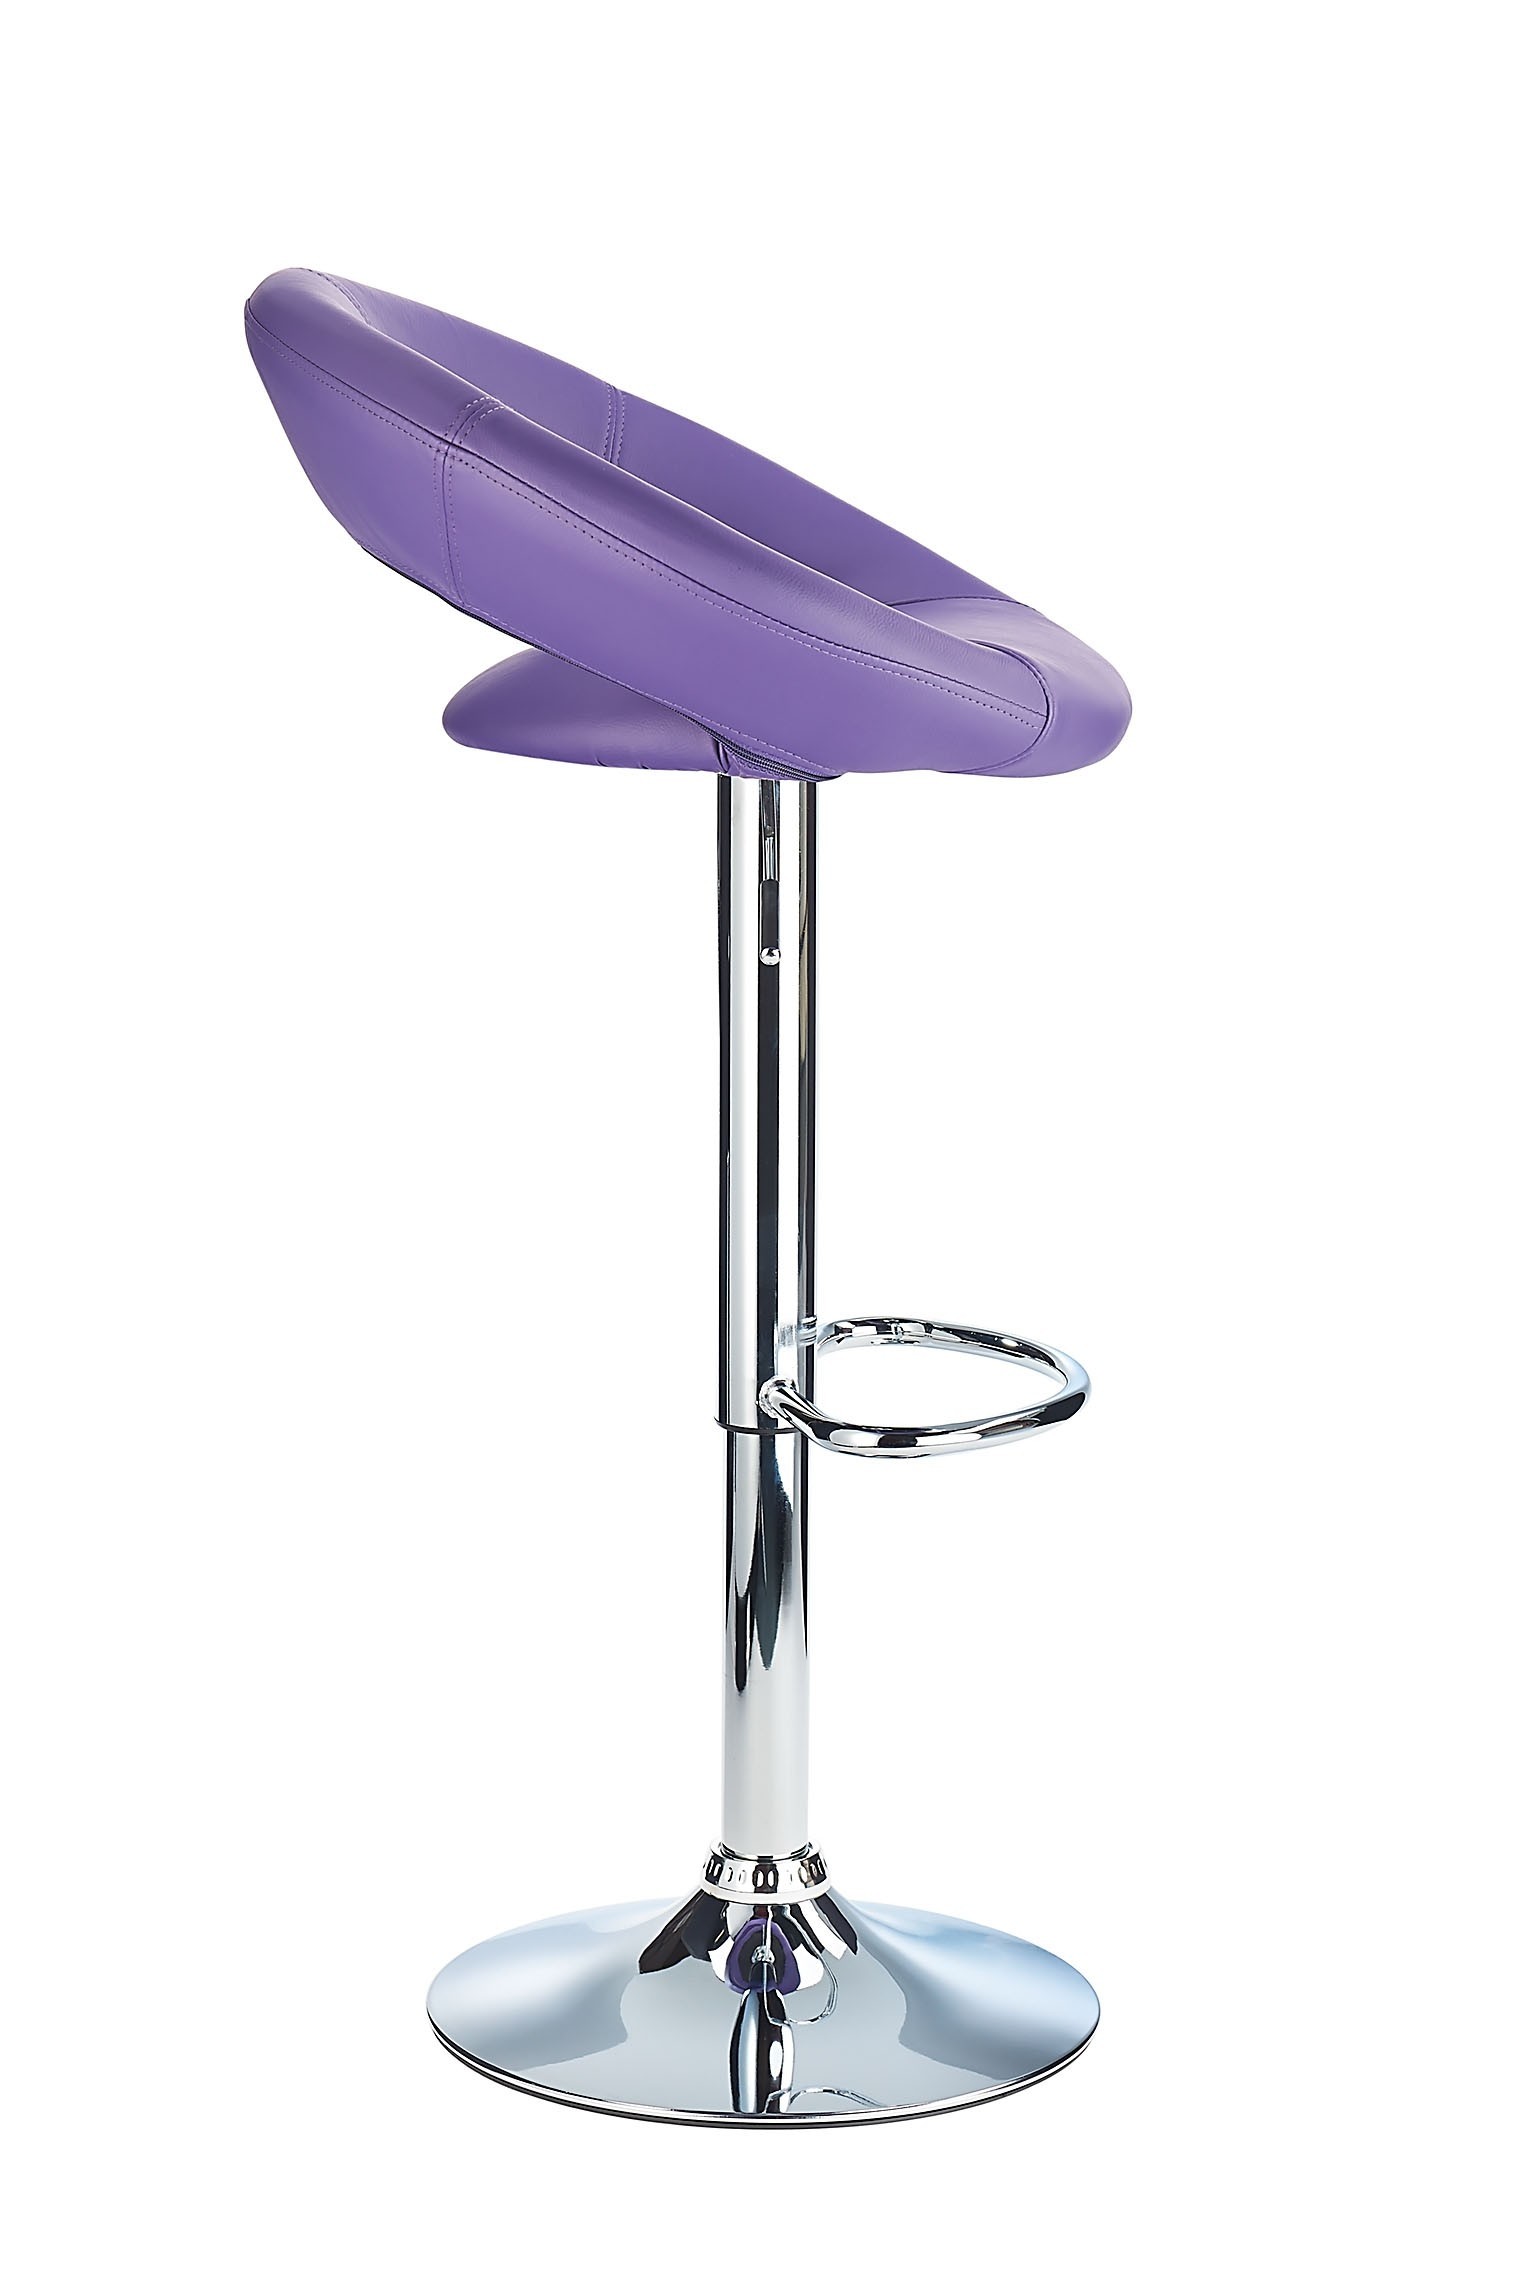 Sorrento bar stool purple 1